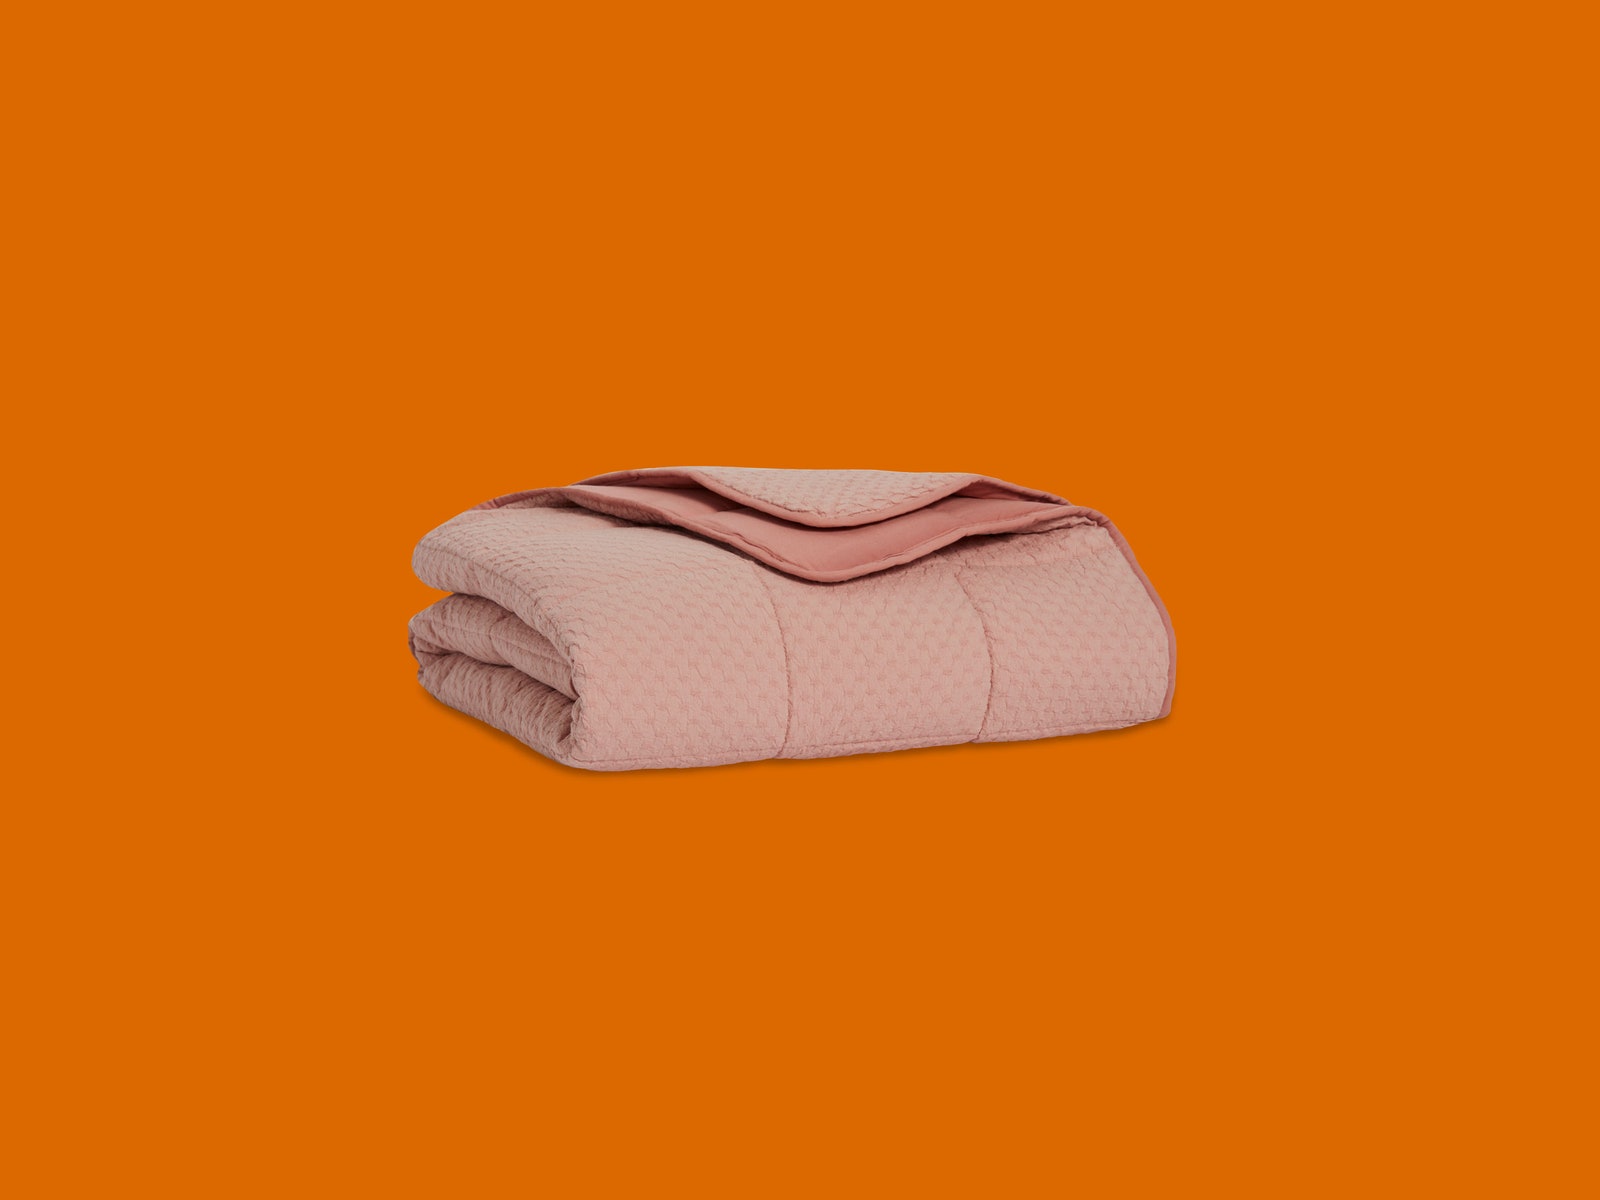 pink Brooklinen blanket on orange background